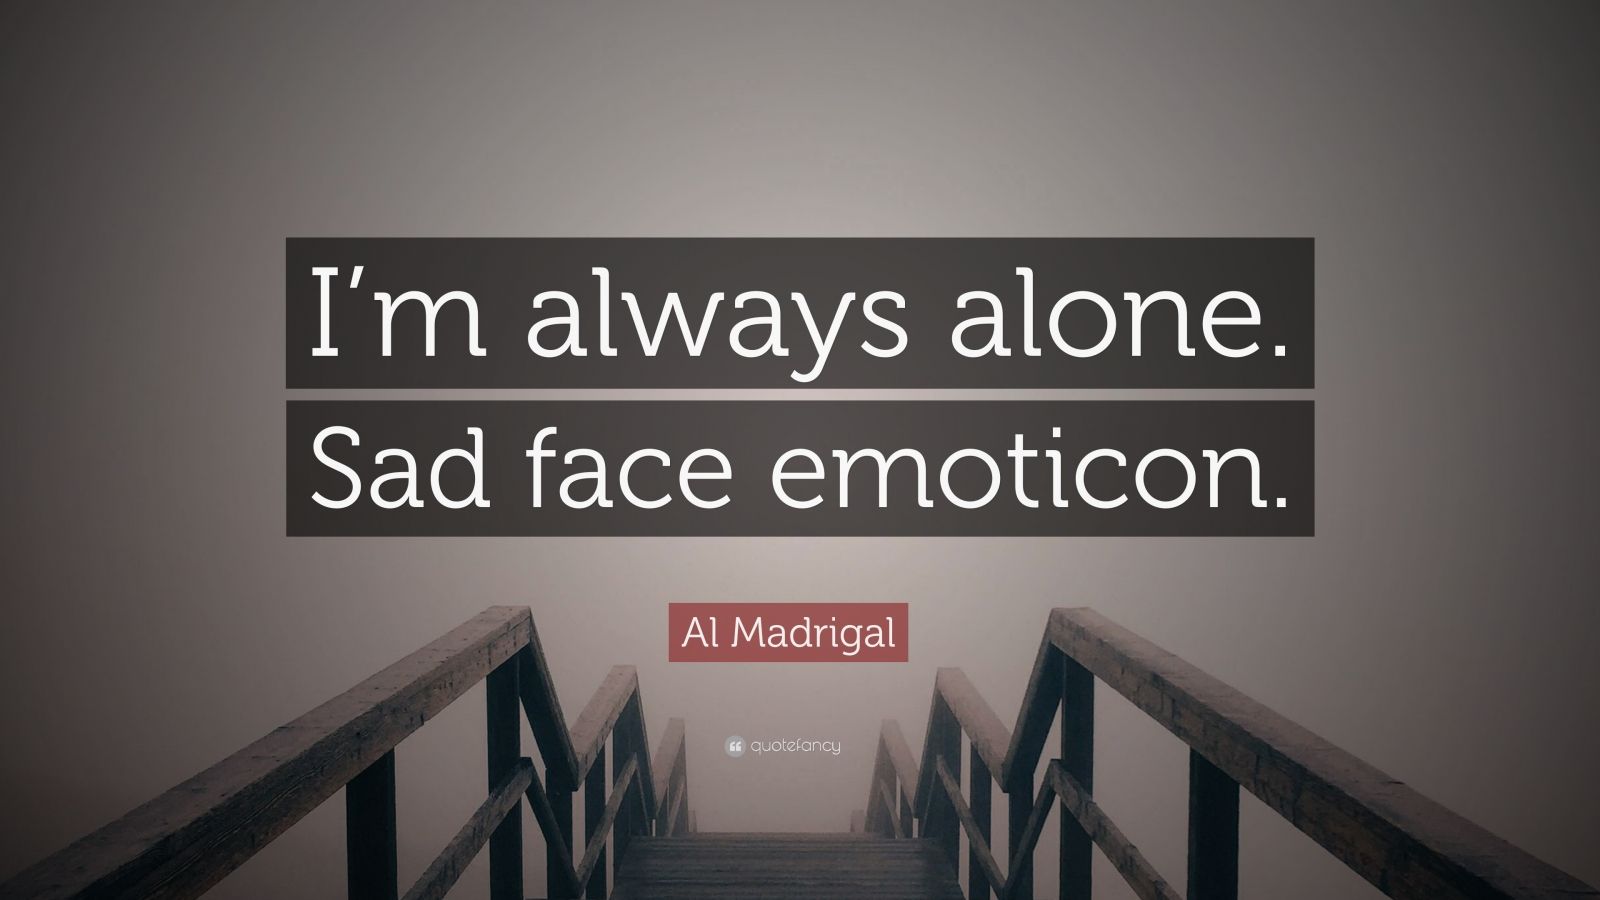 Al Madrigal Quote: "I'm always alone. Sad face emoticon ...